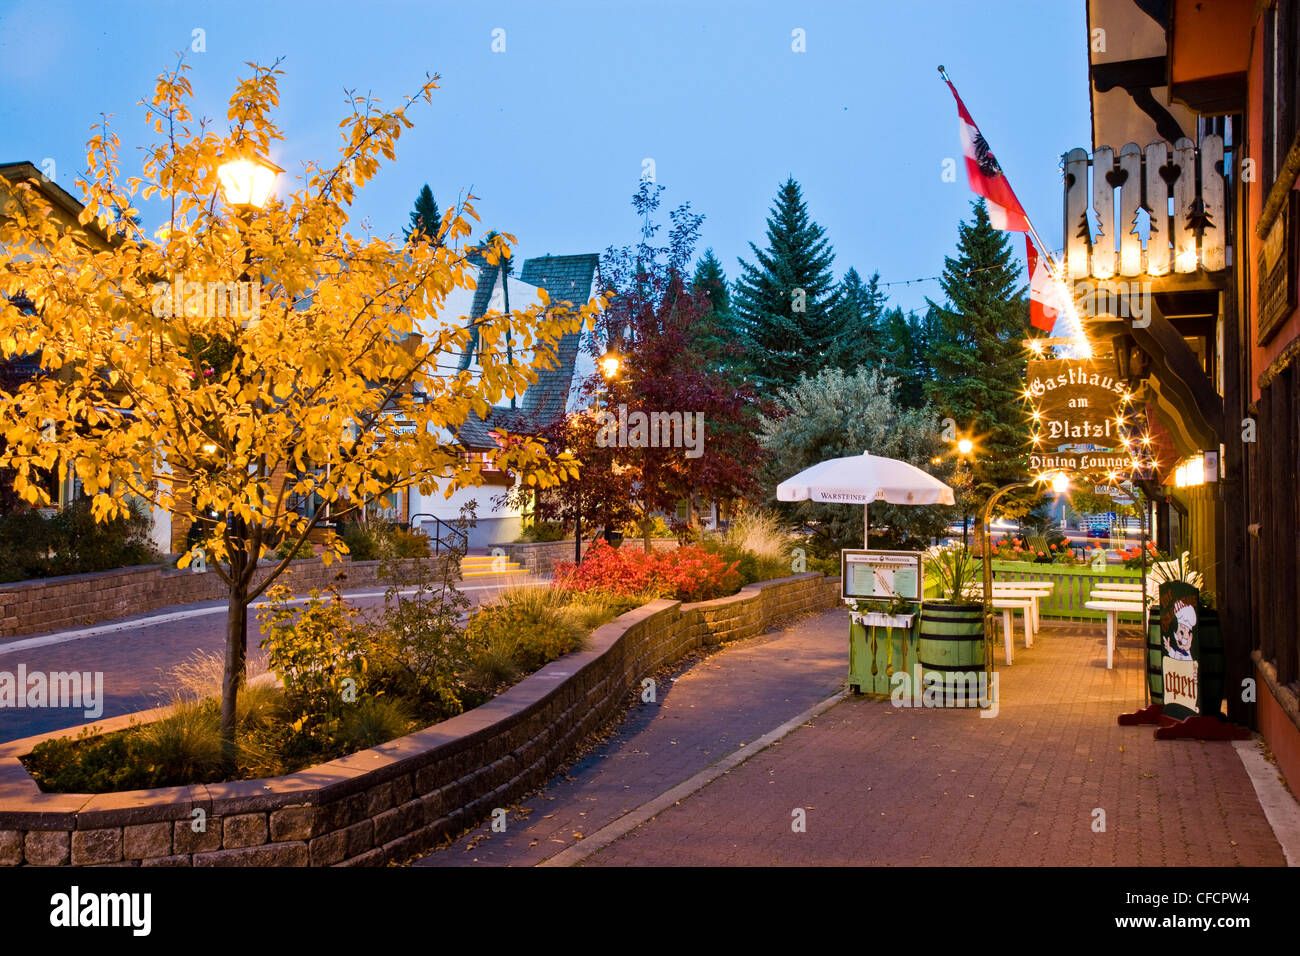 Il Platzl di notte, Kimberley, British Columbia, Canada Foto Stock